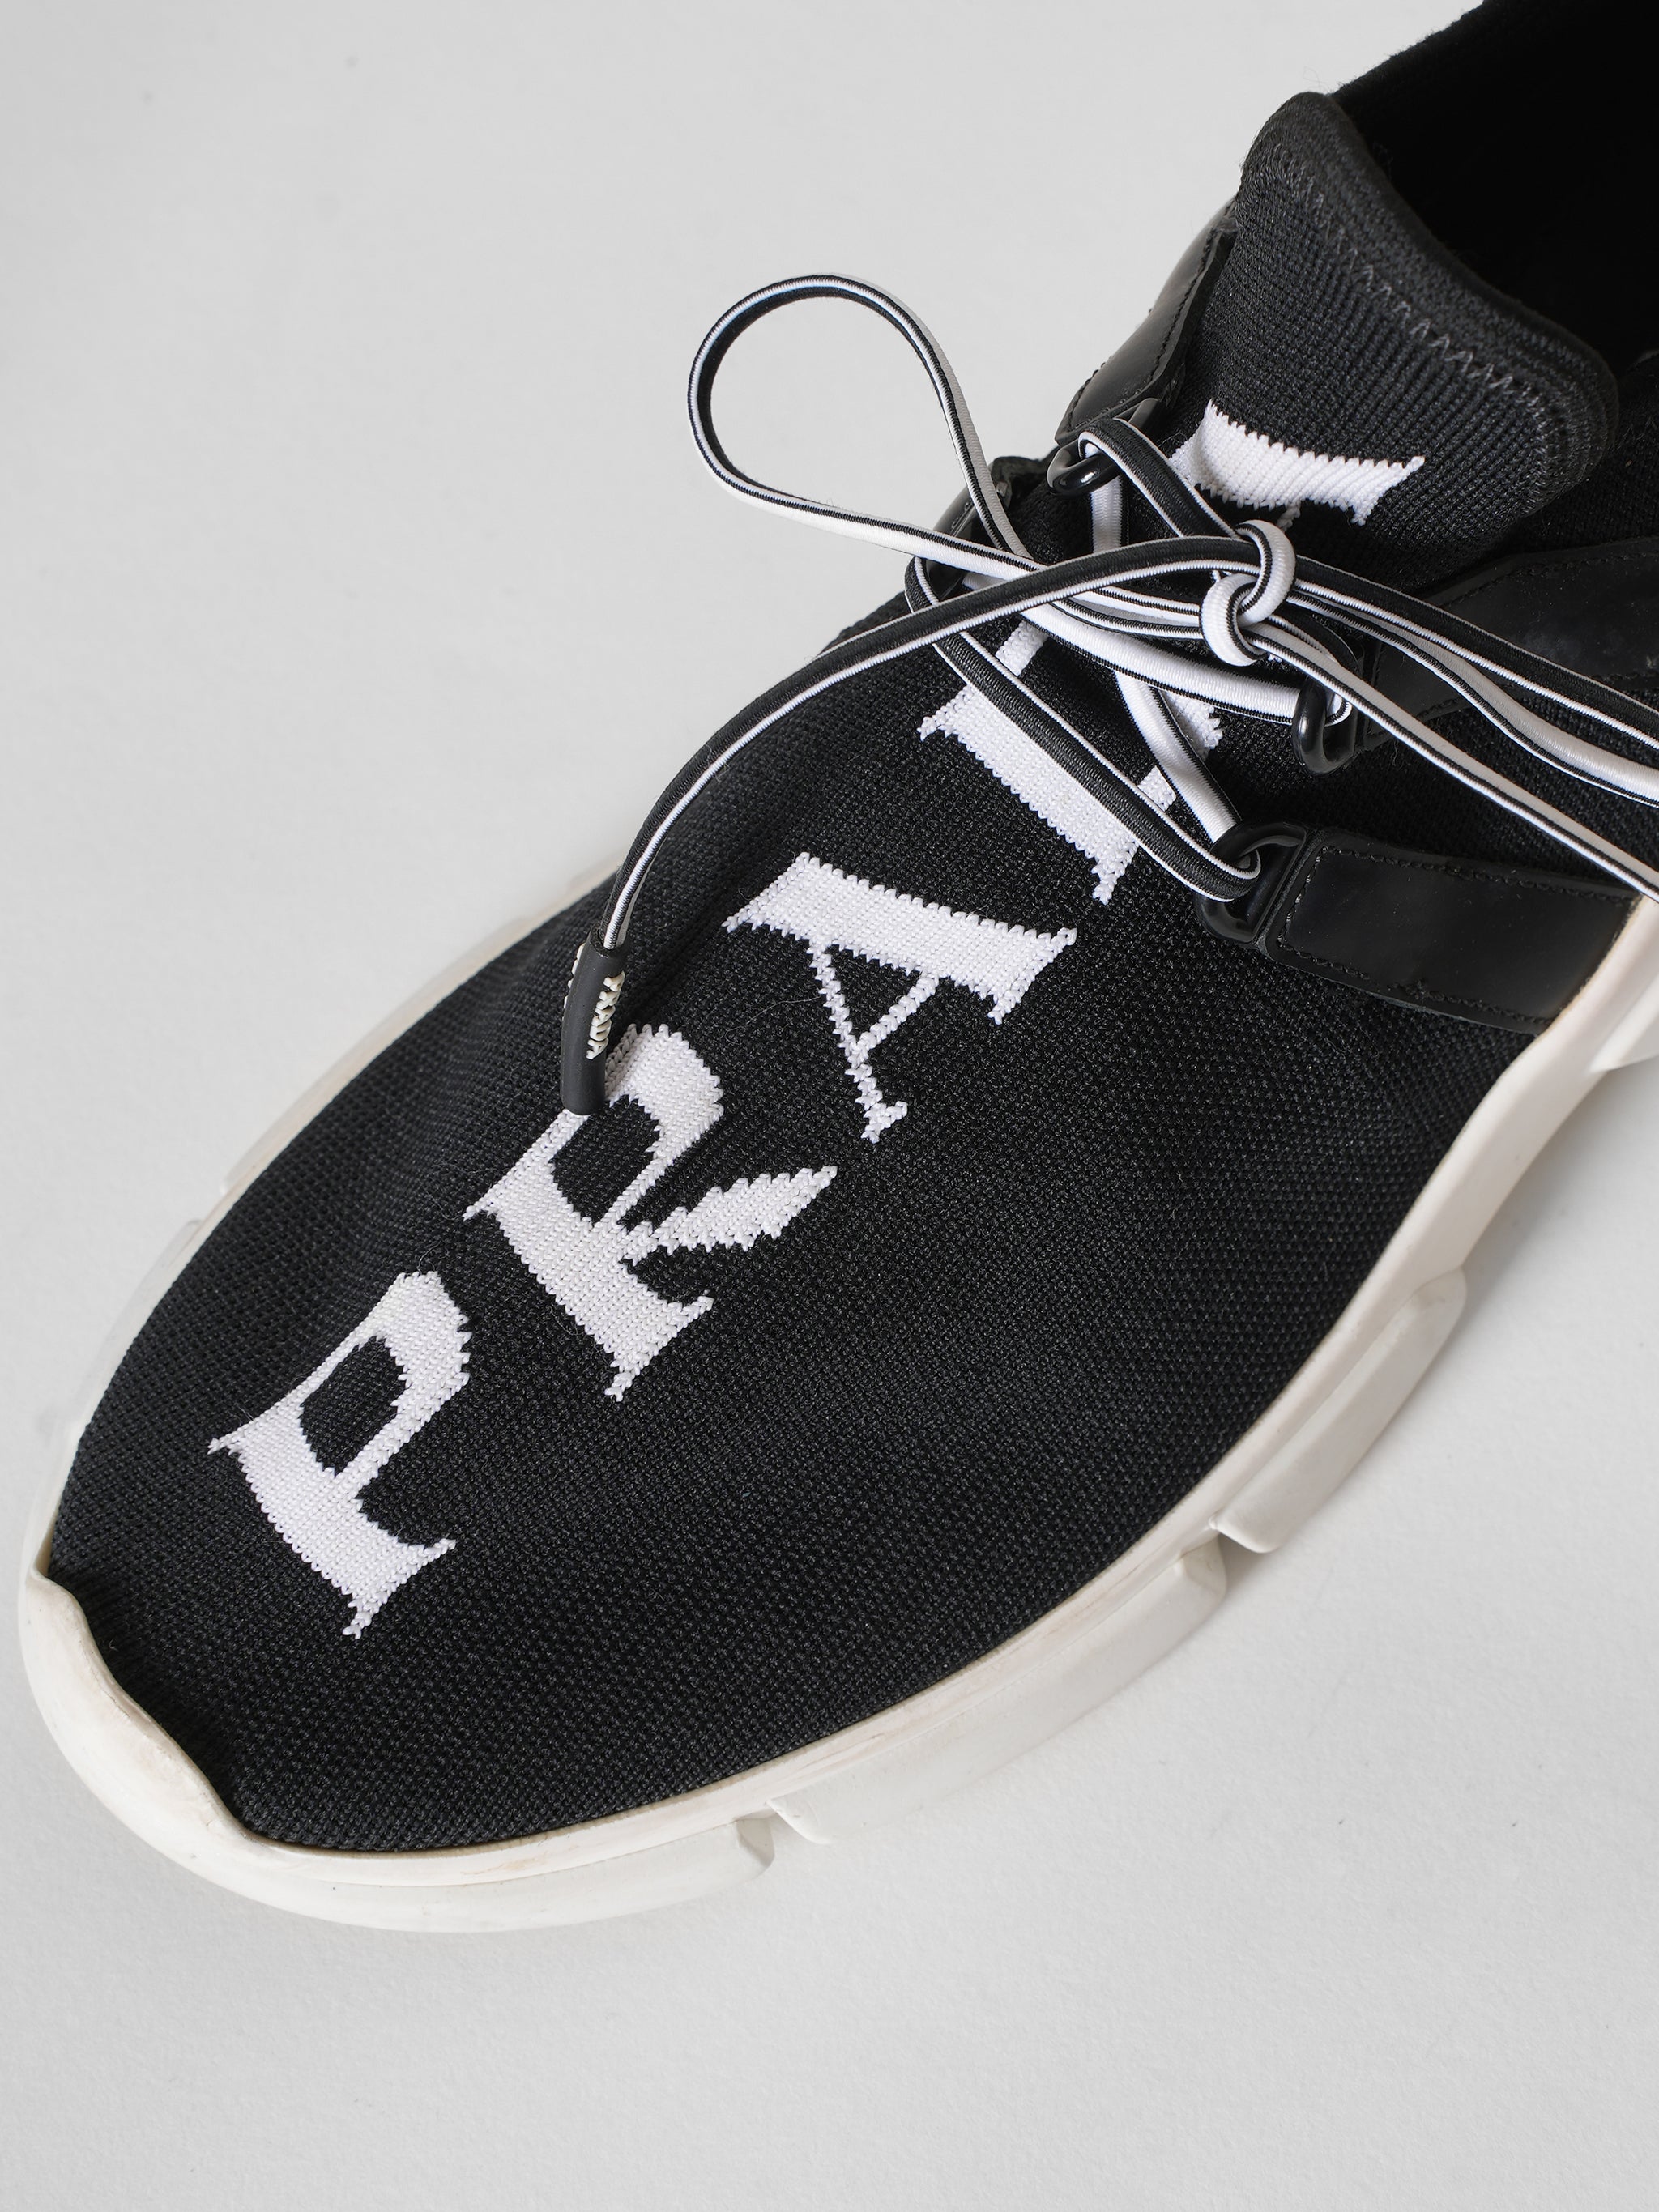 Prada - Calzature Knit Men's Shoes